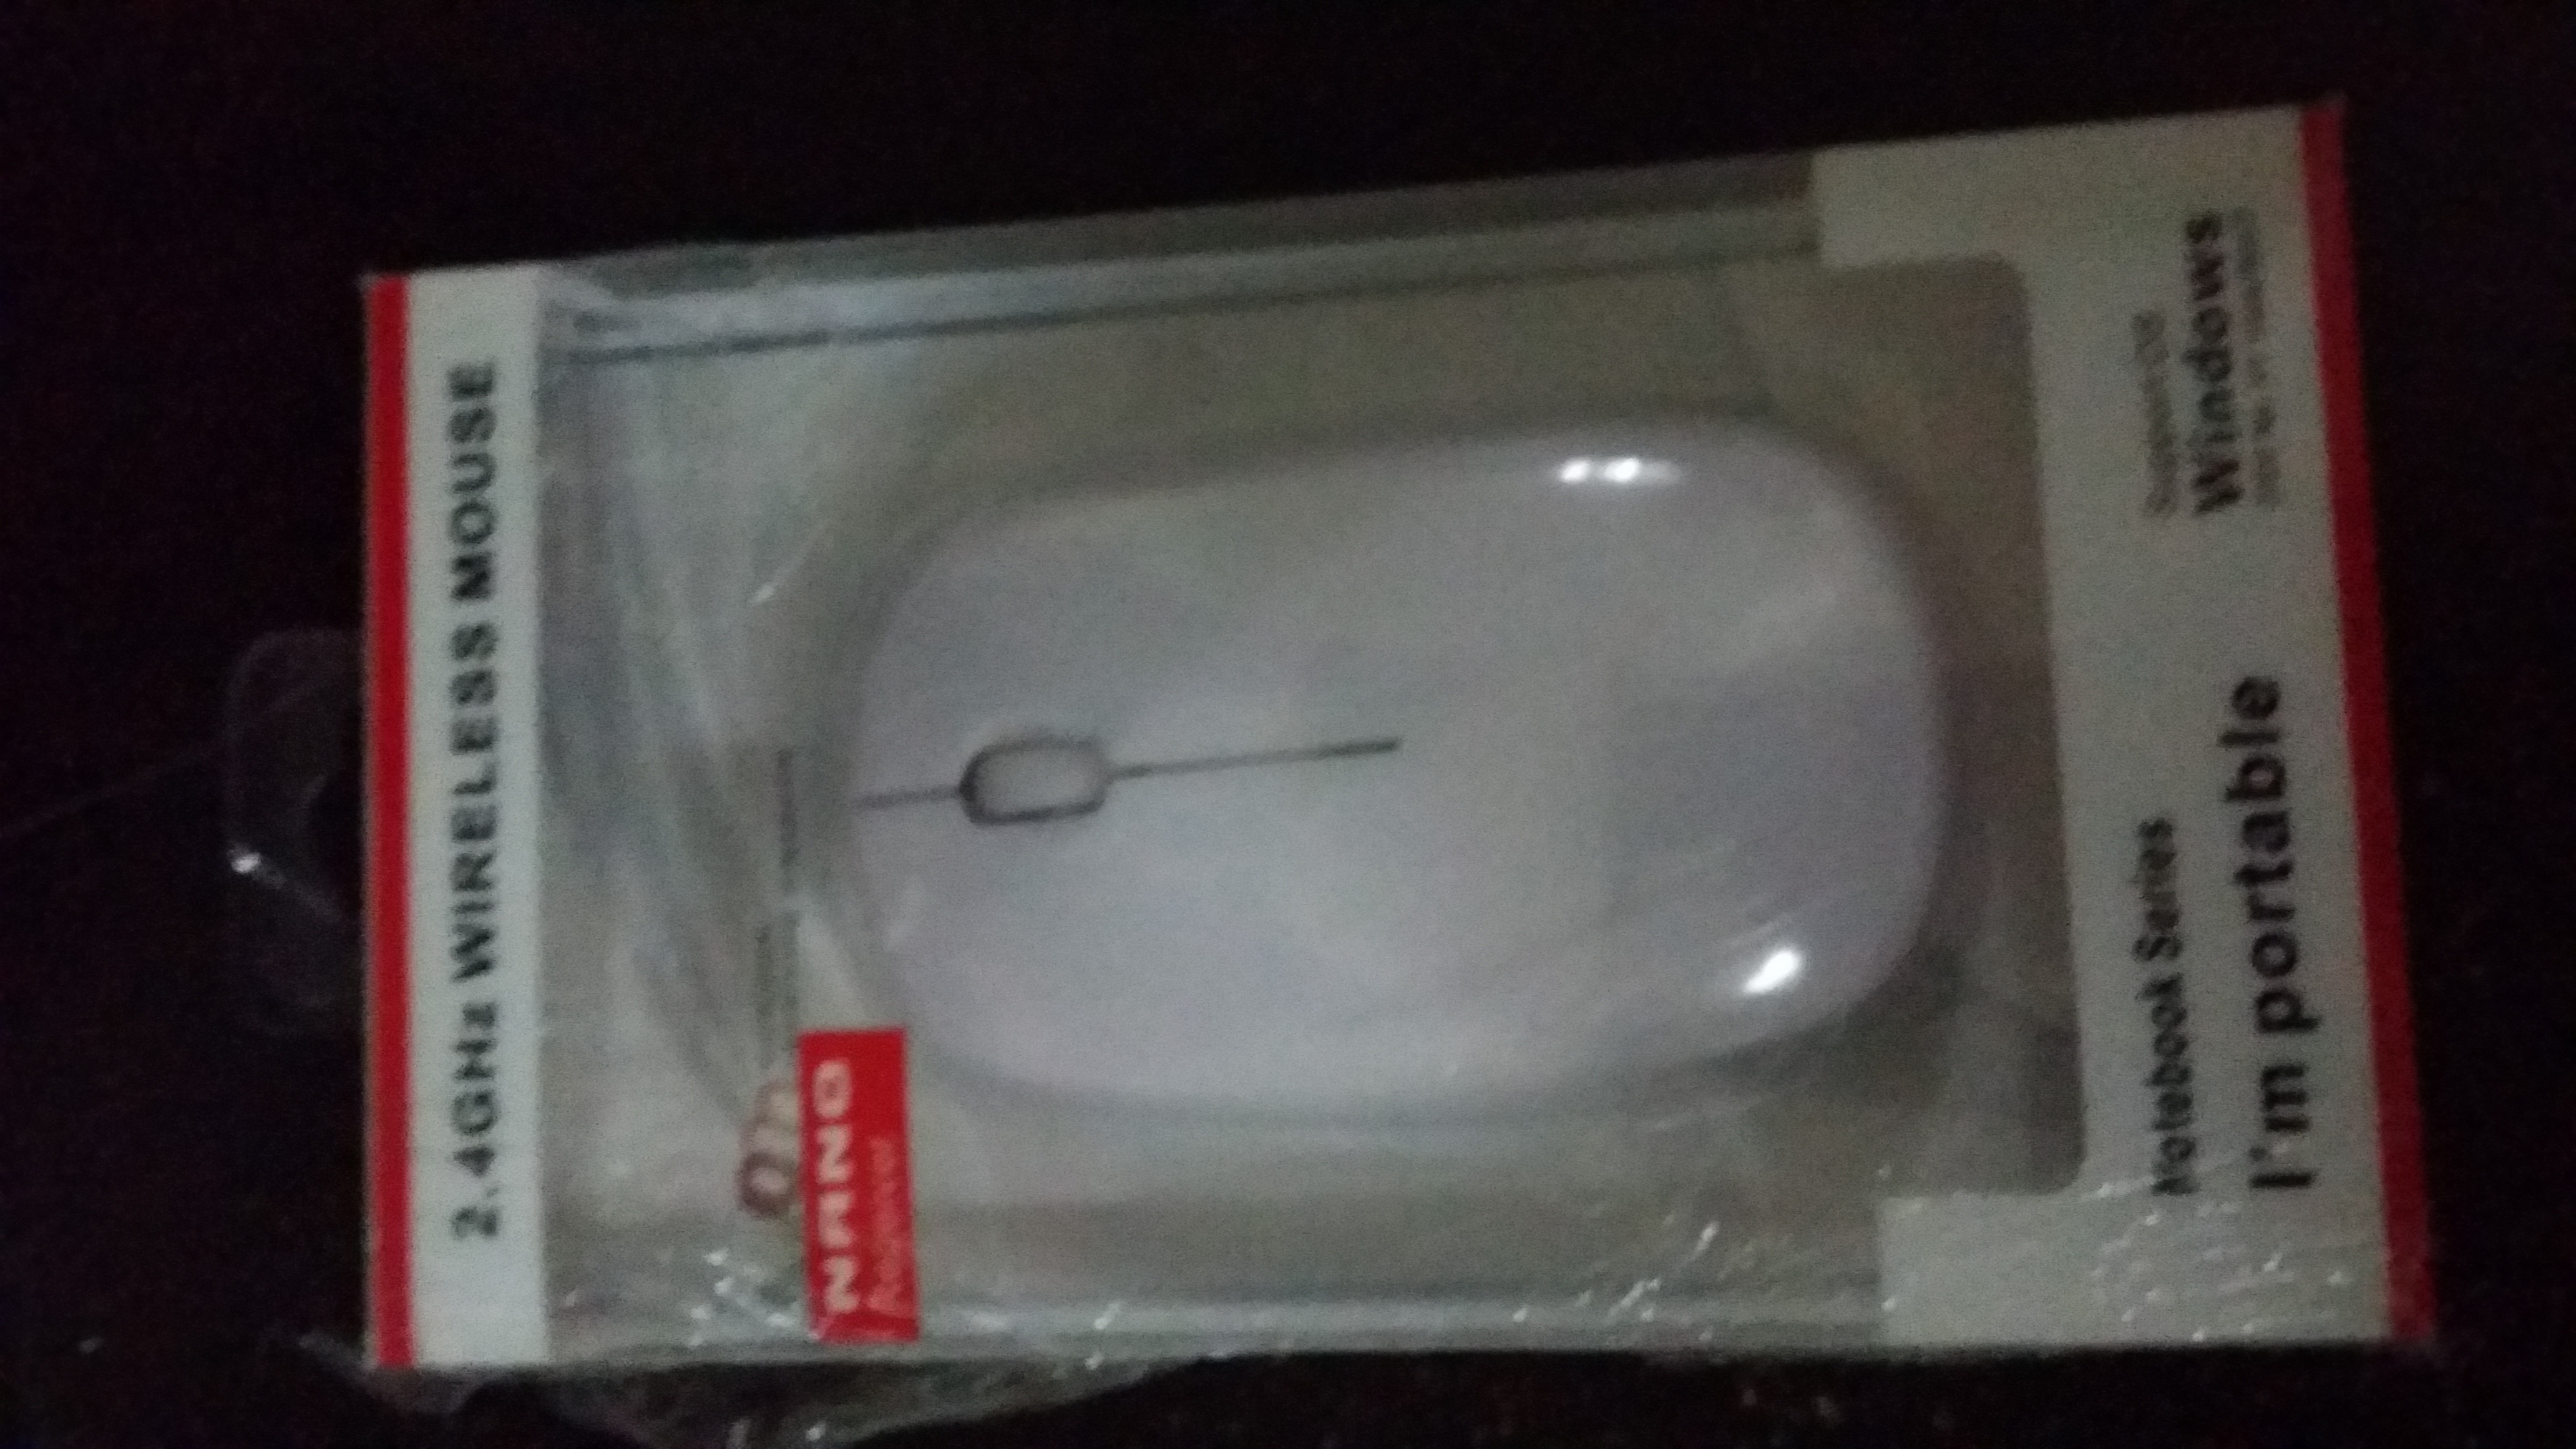 2.4Ghz Wireless Mouse-white colour